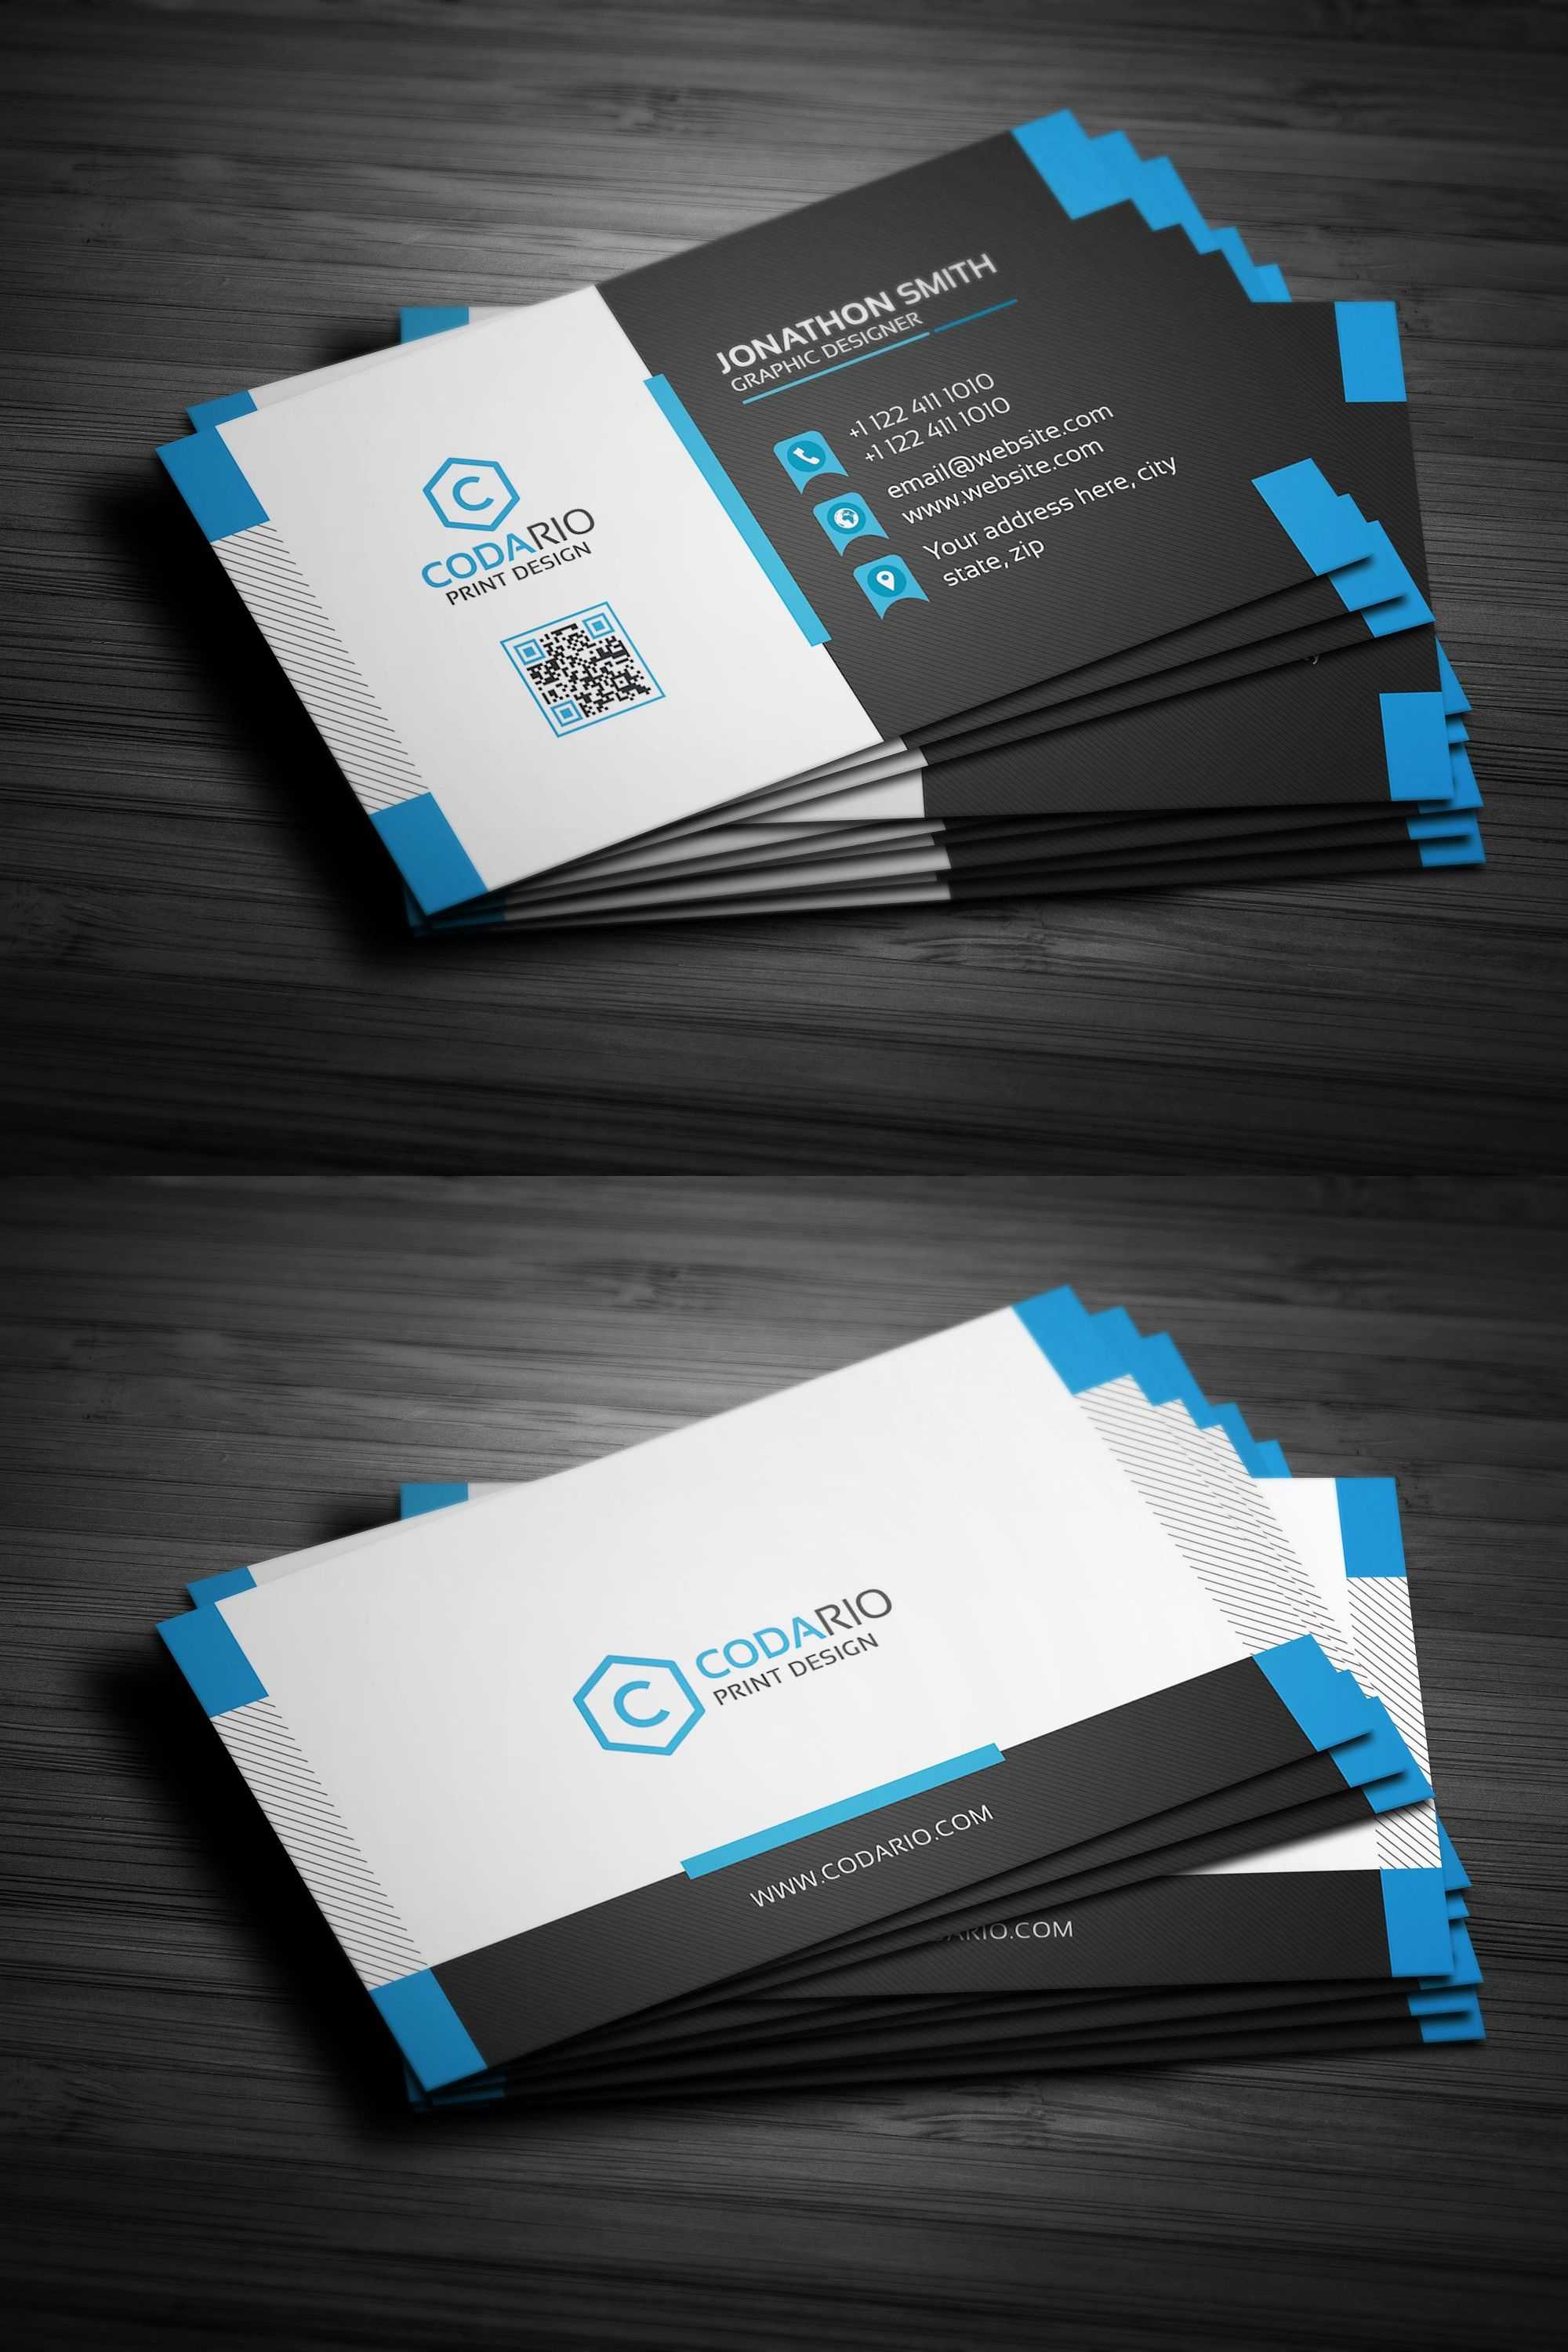 Modern Creative Business Card Template Psd | Business Card With Regard To Web Design Business Cards Templates